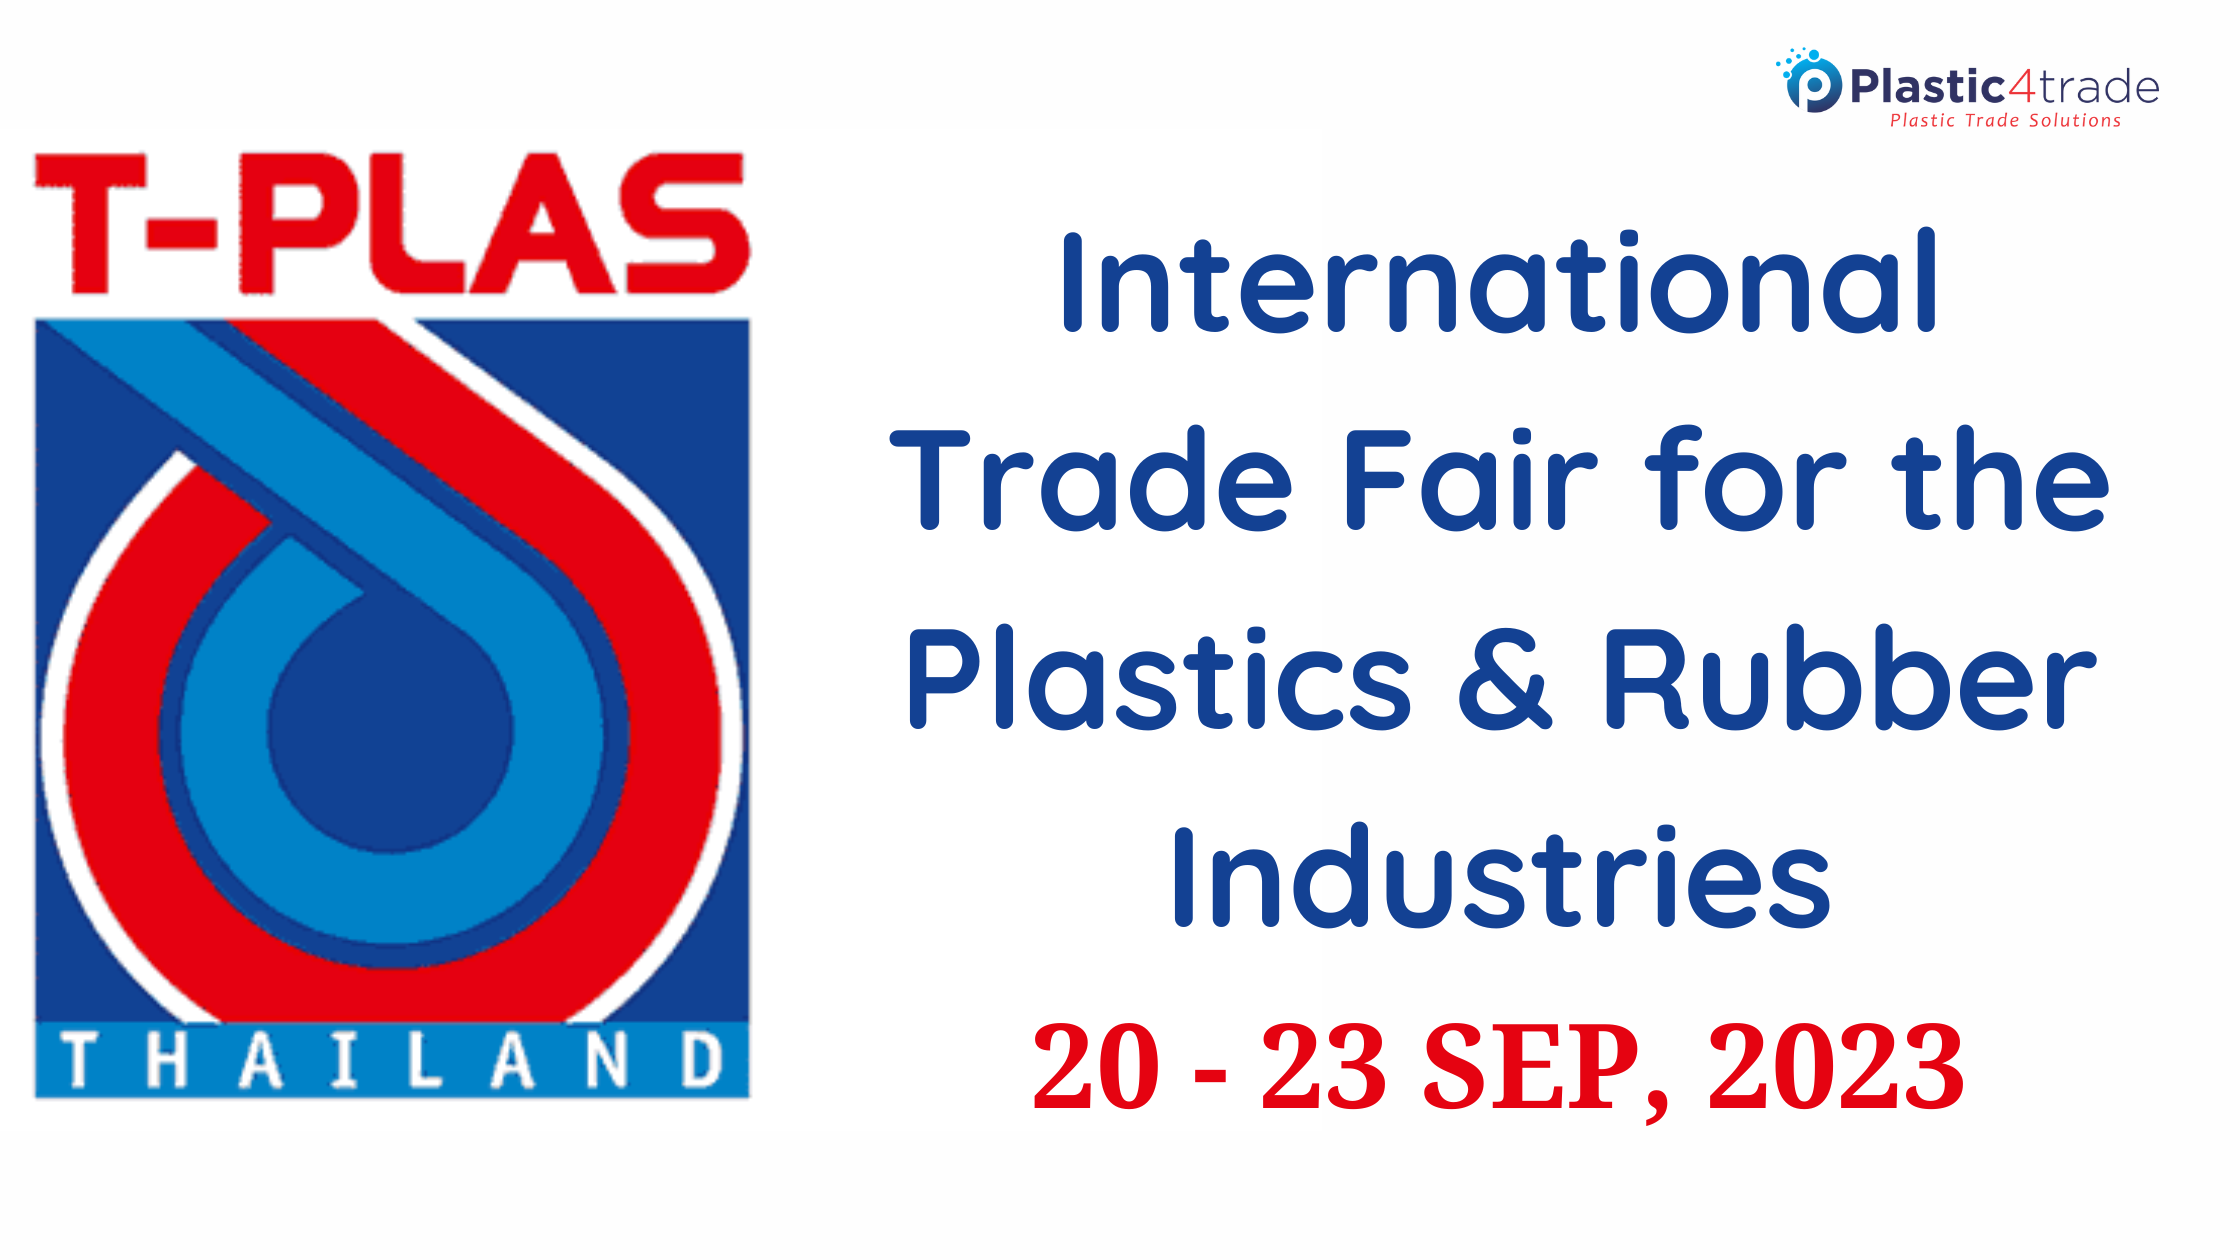 T-Plas International Plastics & Rubber Trade Fair 2023 Plastic4trade